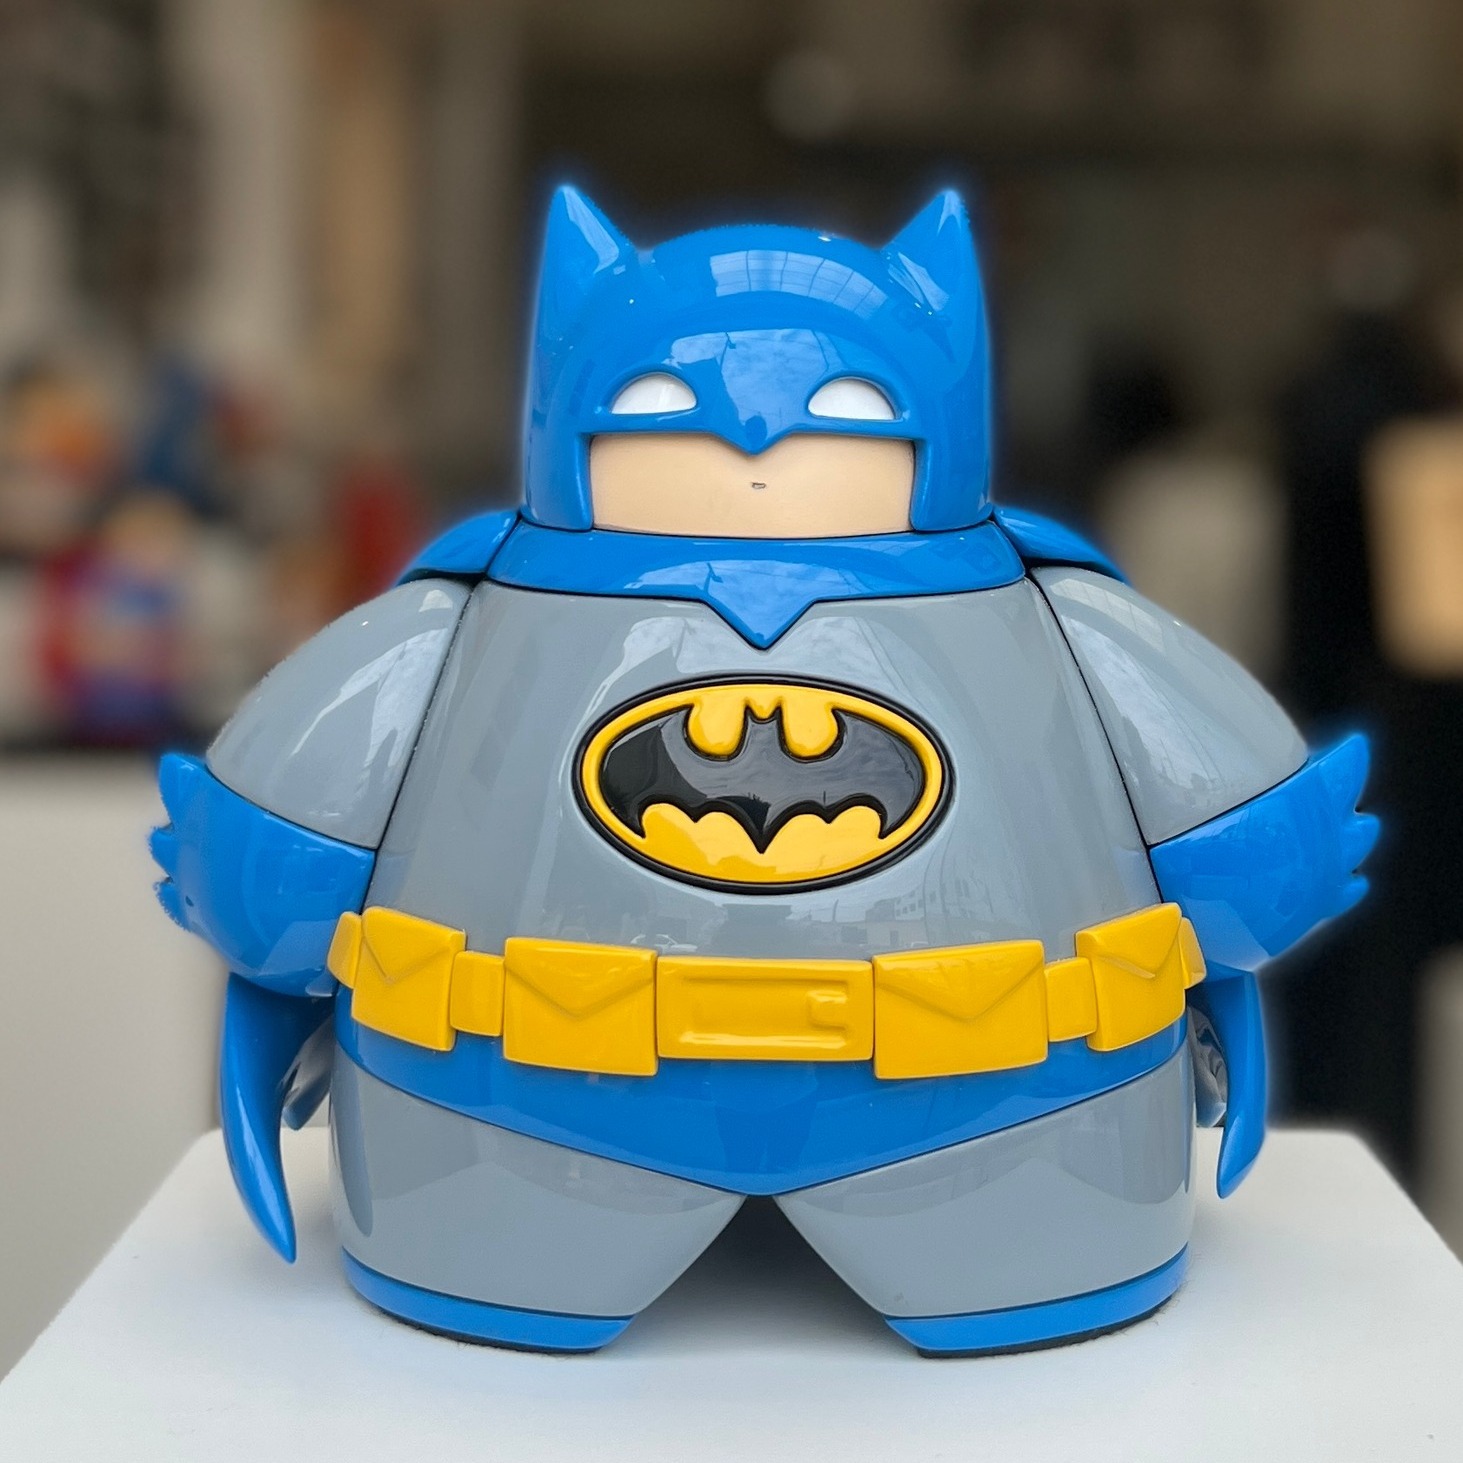 Batwheels,' DC's Animated 'Batman' Preschool Series, Launches in the U.K.